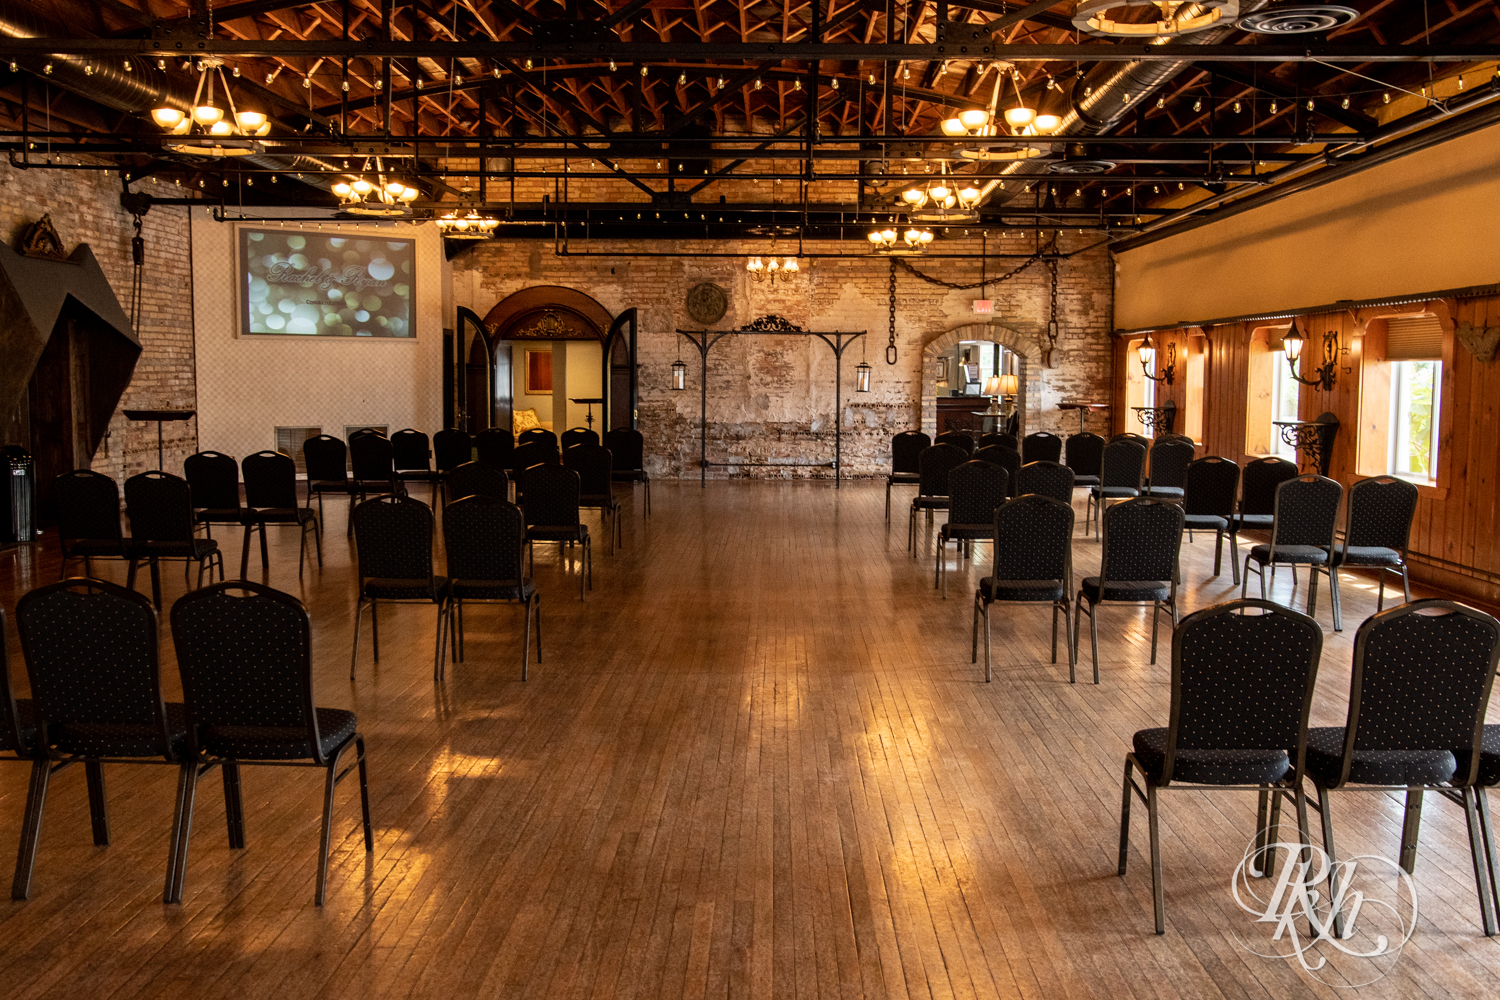 Small indoor wedding ceremony setup at Kellerman's Event Center in White Bear Lake, Minnesota.